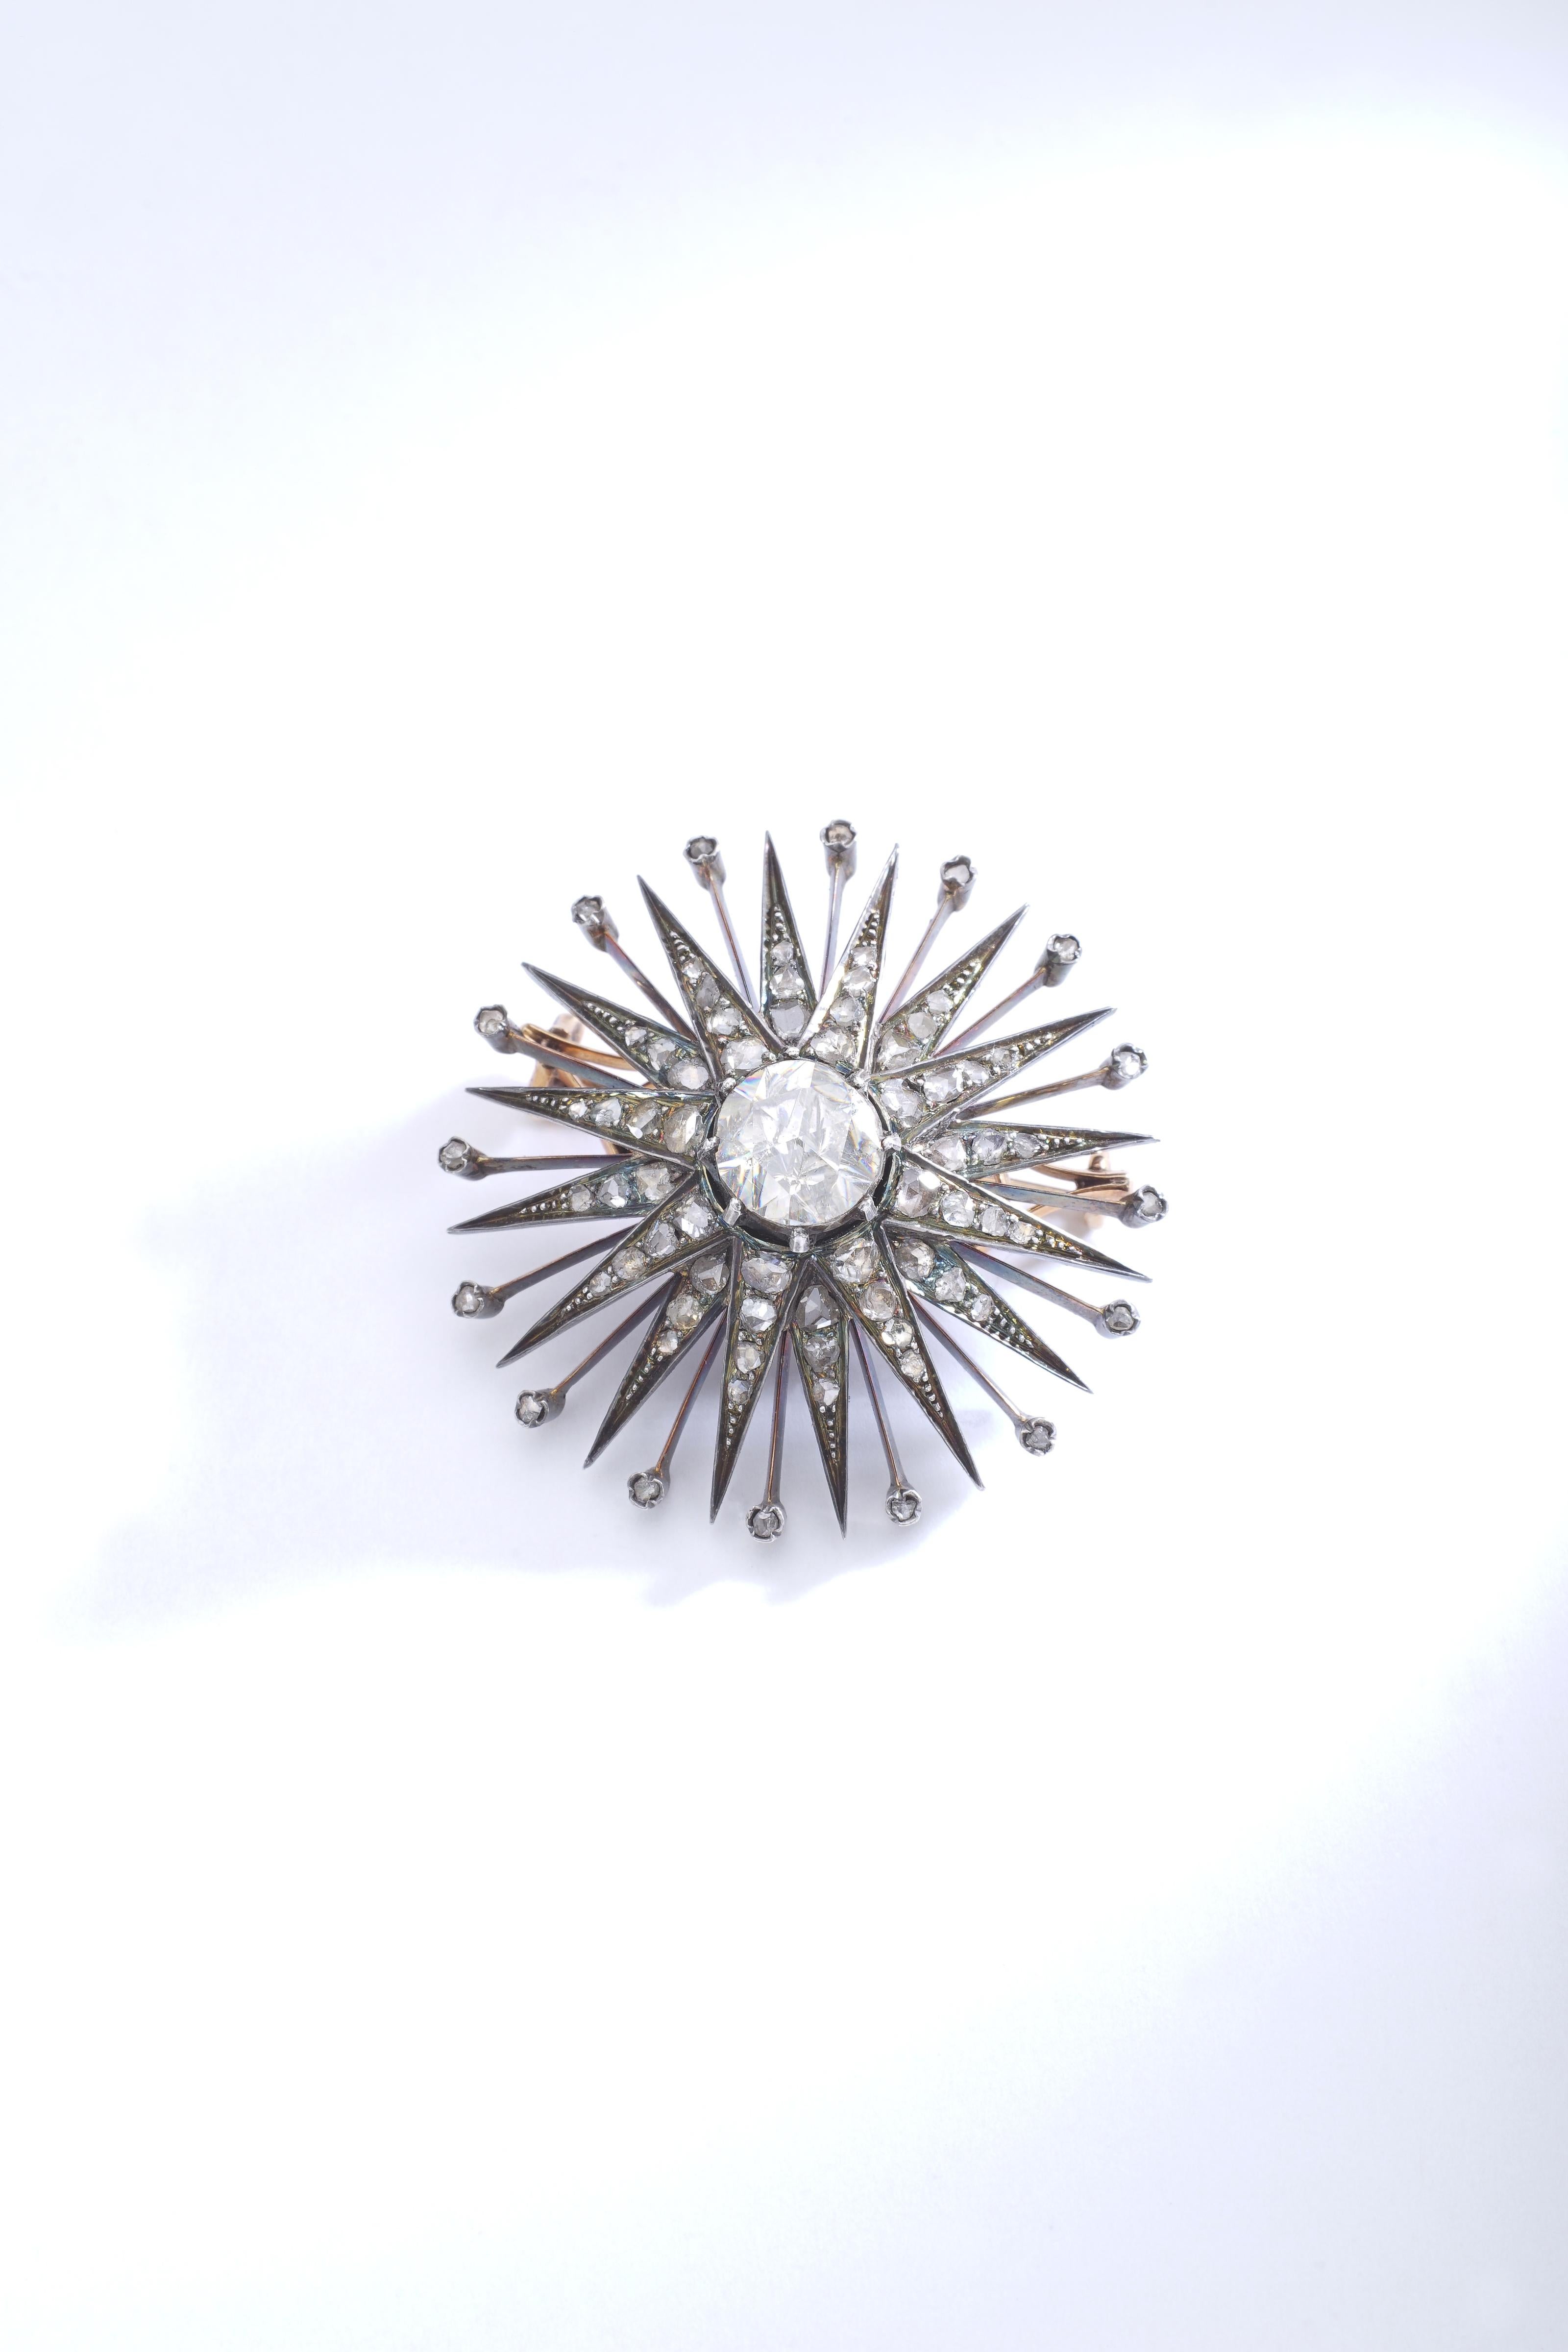 Antique Rose Cut Diamond Silver Gold Pendant Necklace Gold Chain 1